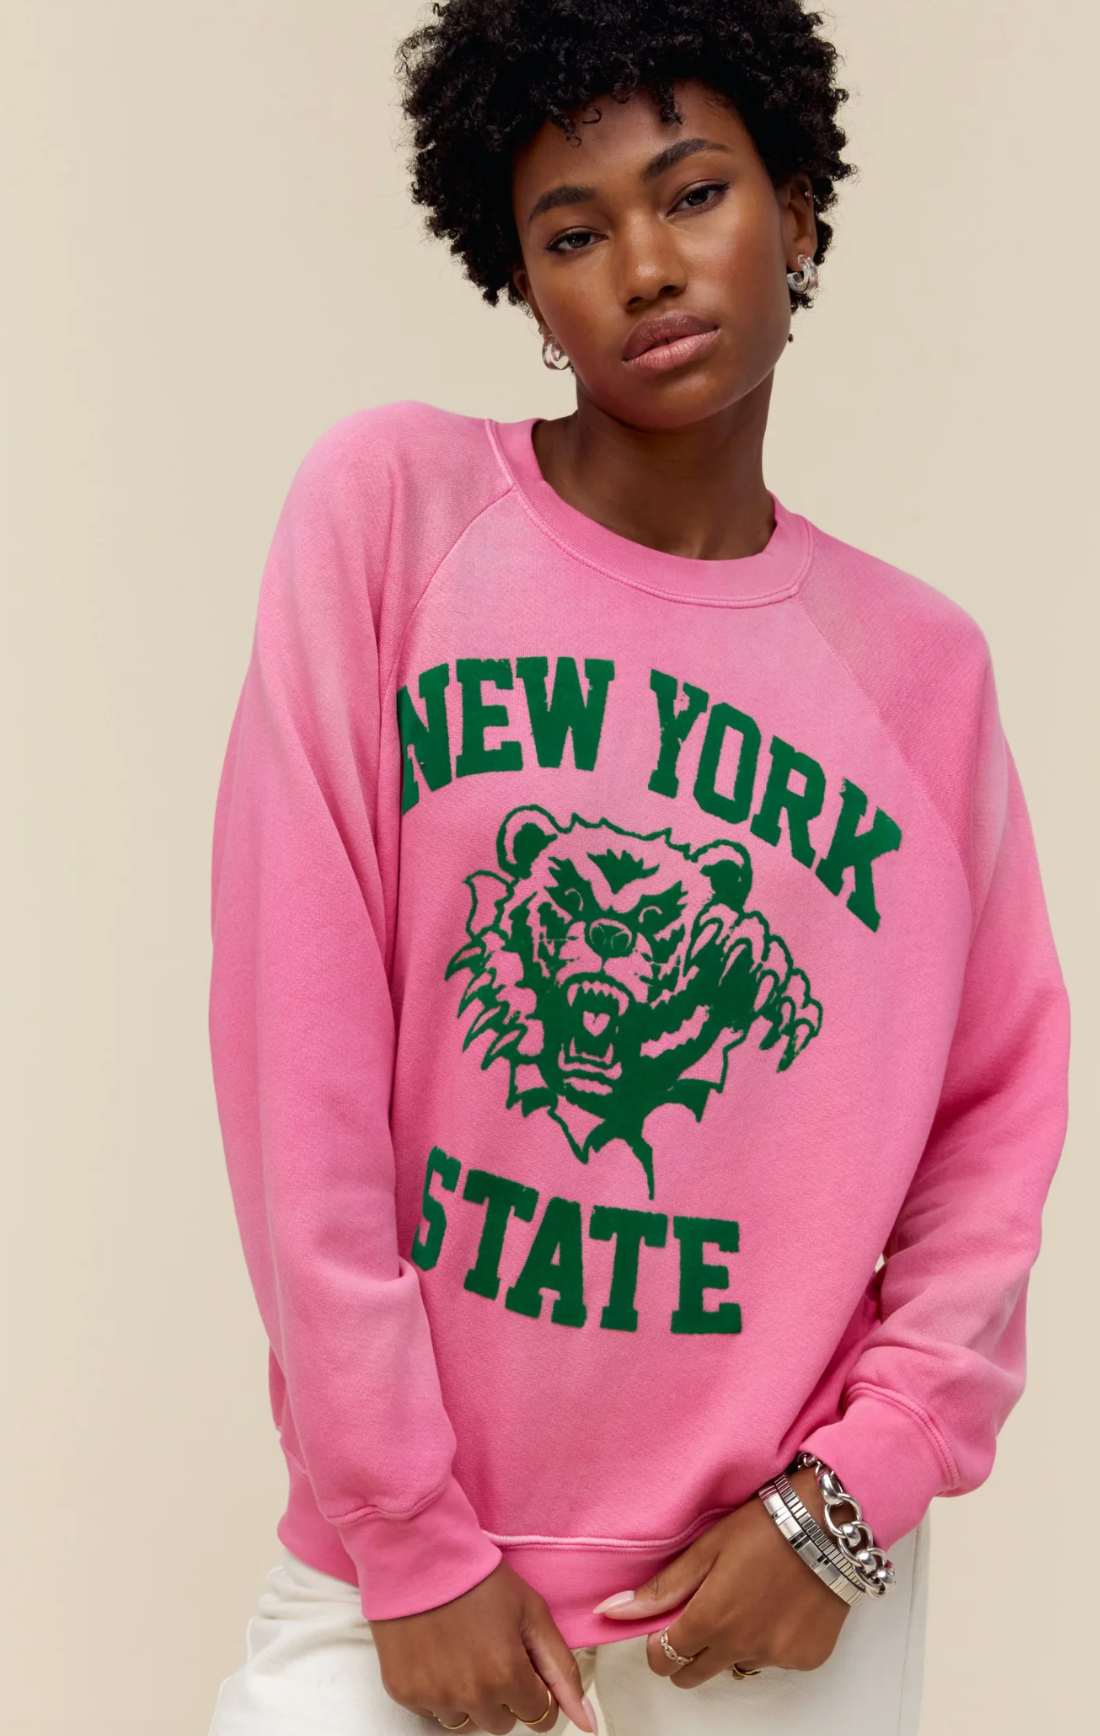 New York State Vintage Sweatshirt